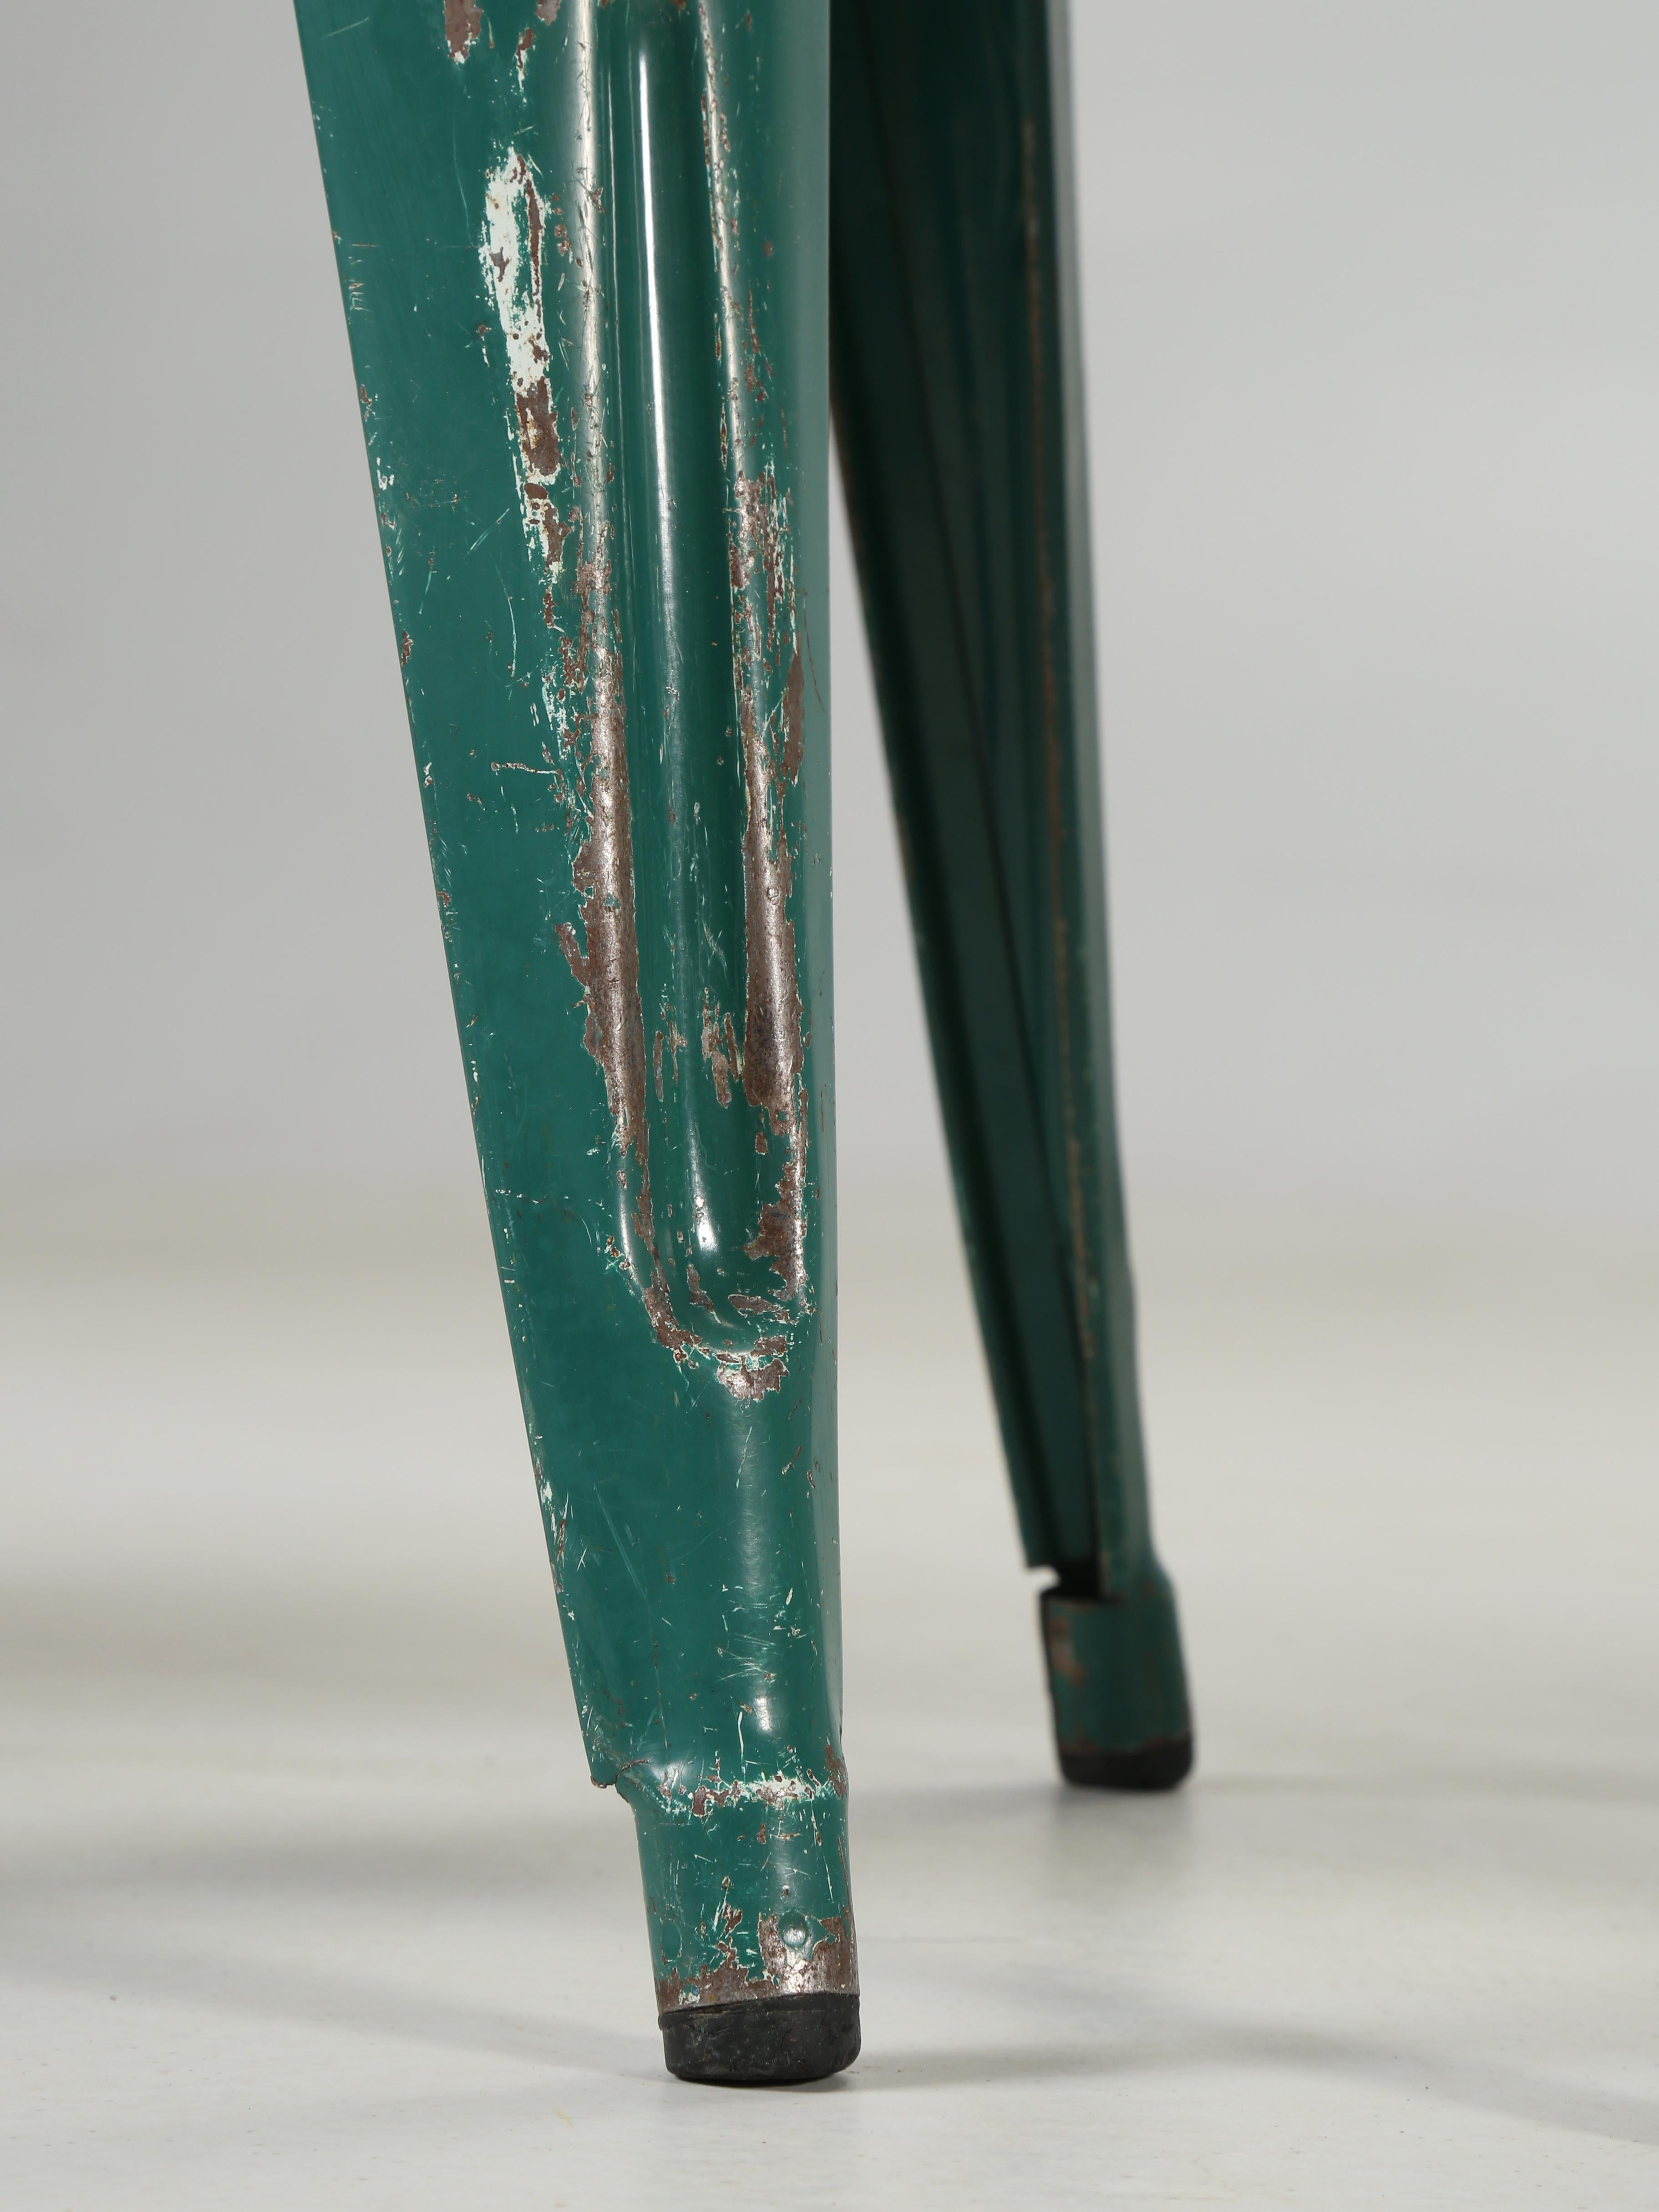 Genuine Vintage French Tolix Stacking Stools, Set '4' Green Nice Patina, 1960's 4